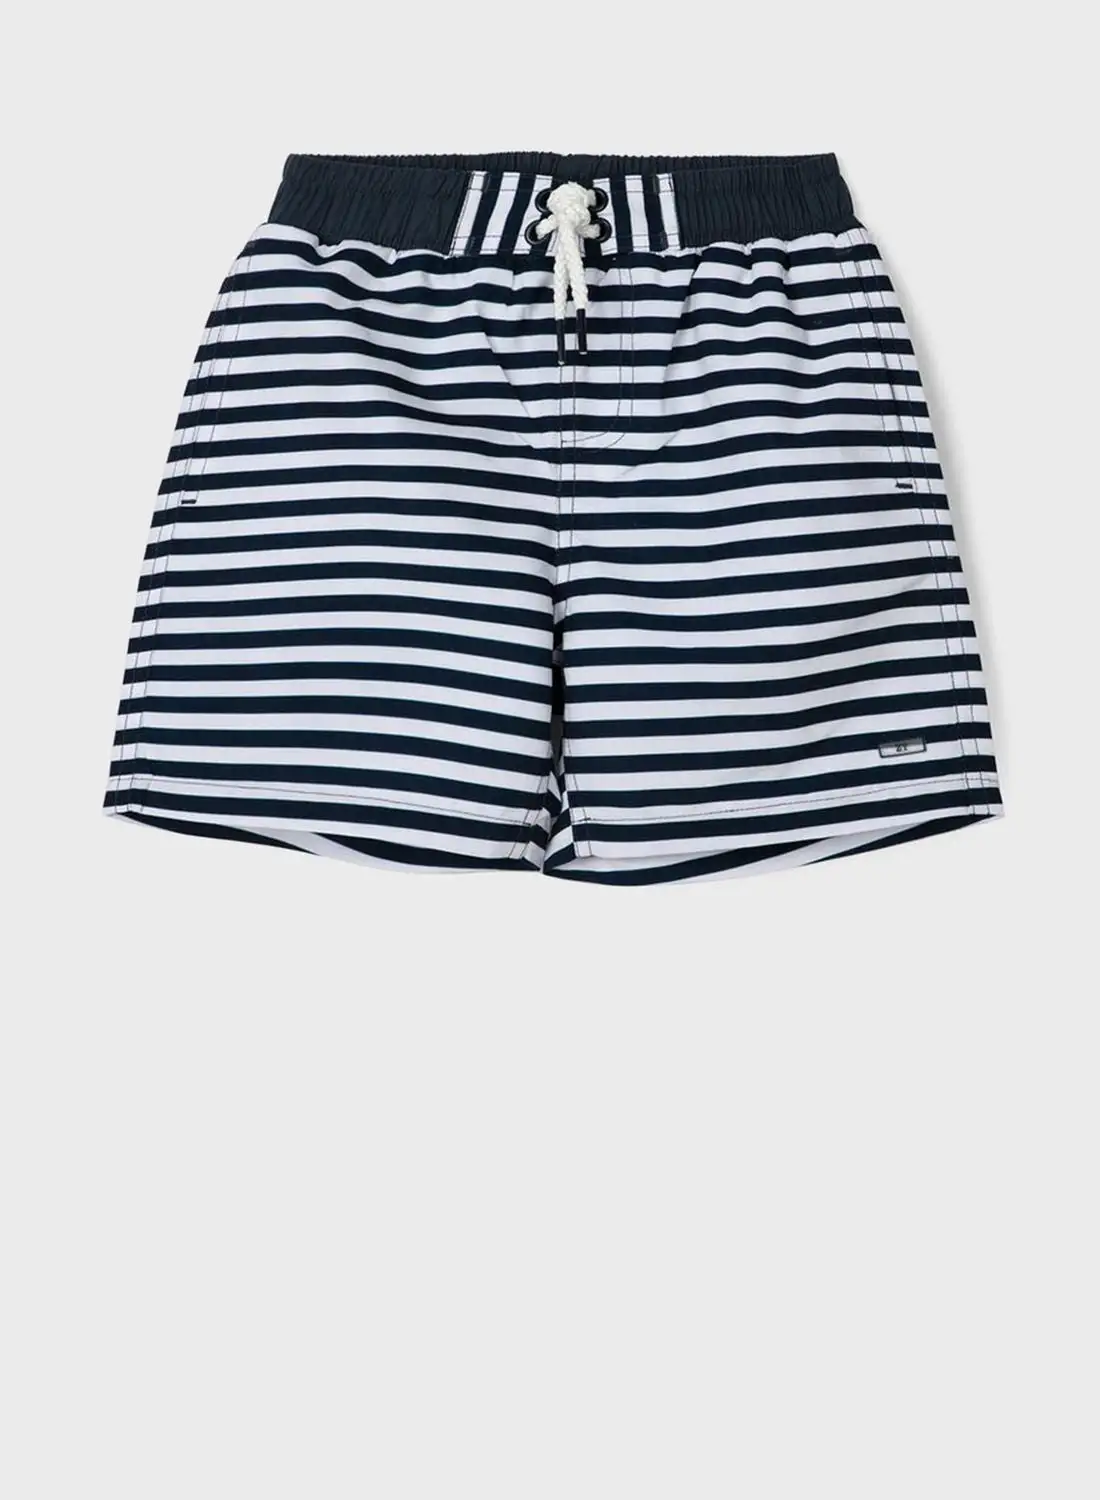 Zippy Kids Striped Shorts